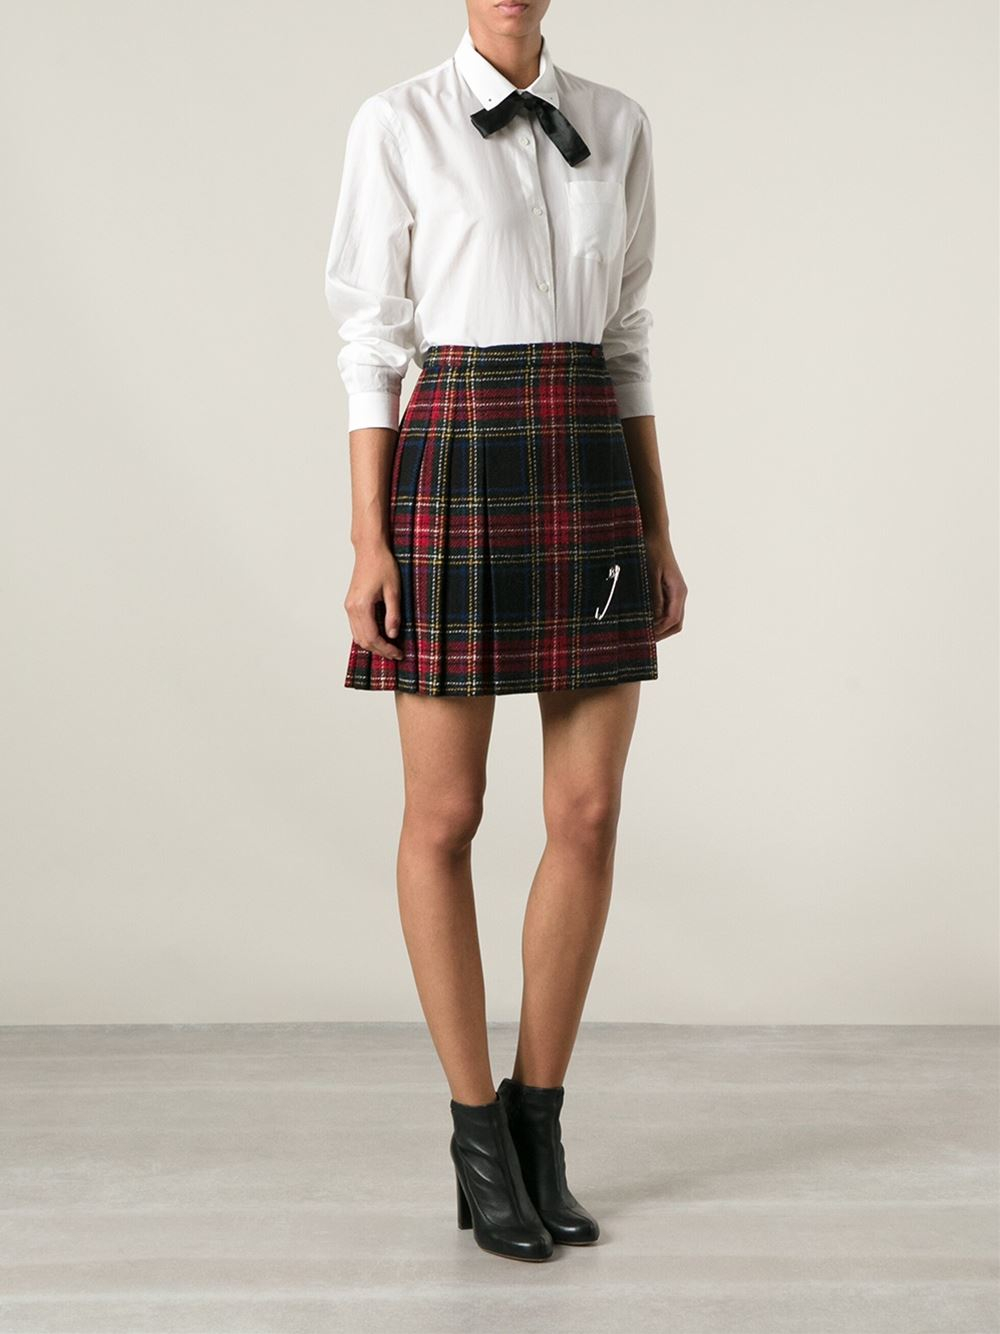 Saint Laurent Tartan Mini Skirt in Red - Lyst